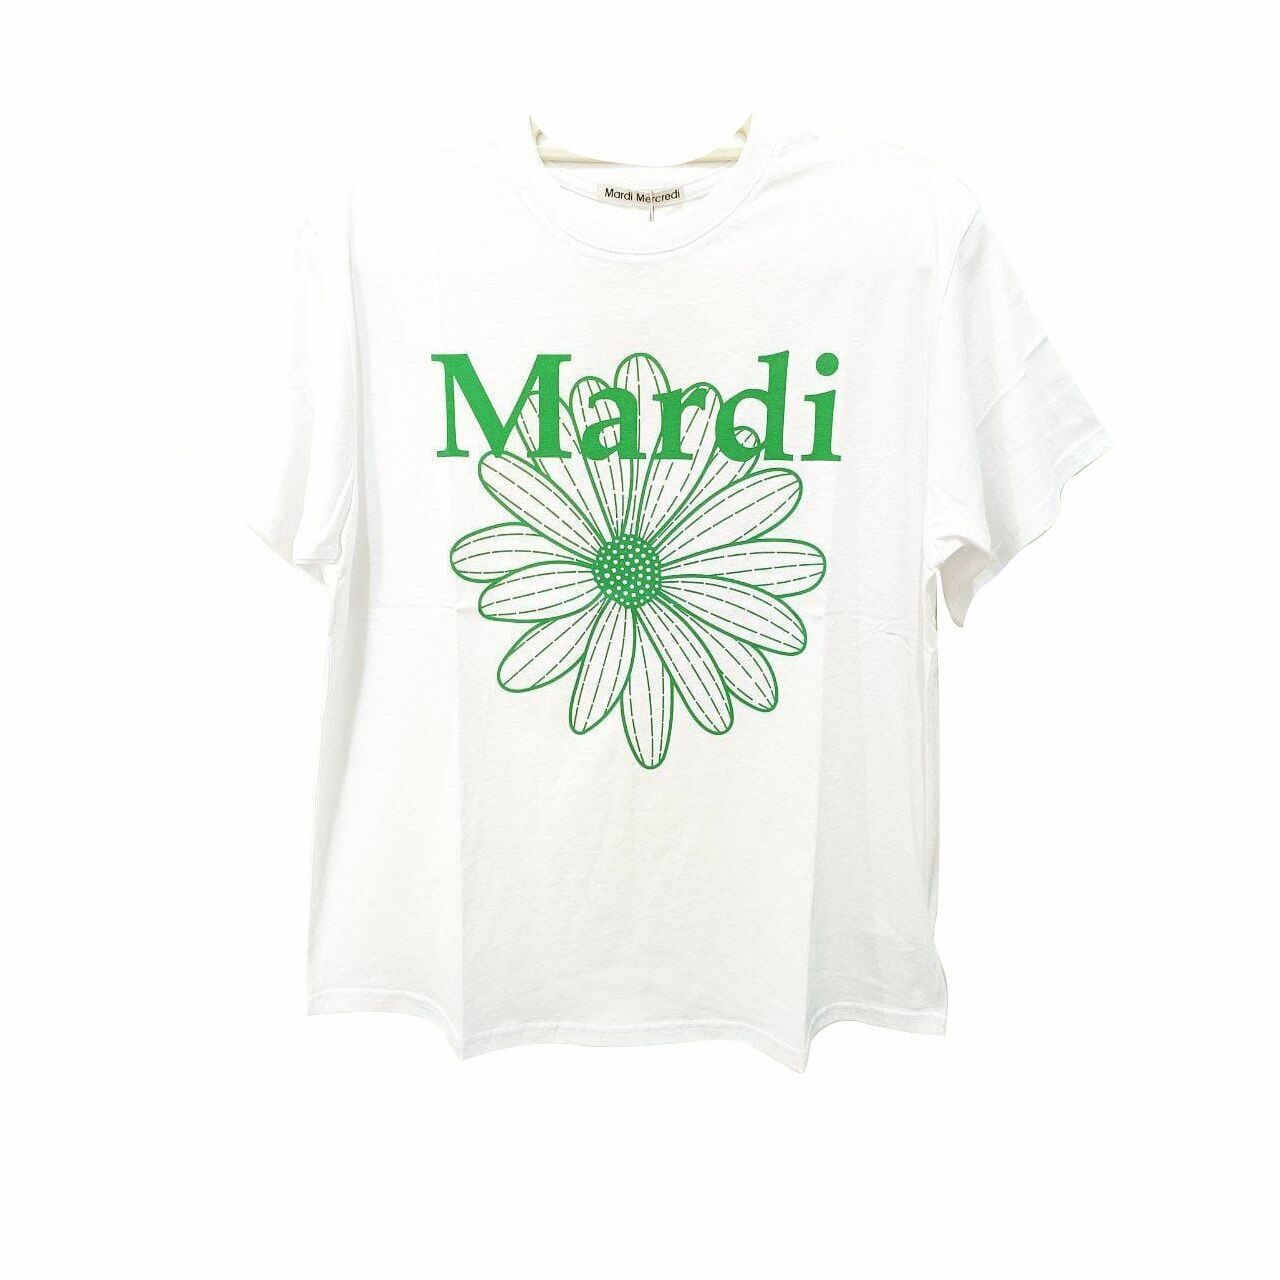 Mardi Mercredi Tshirt in White & Green